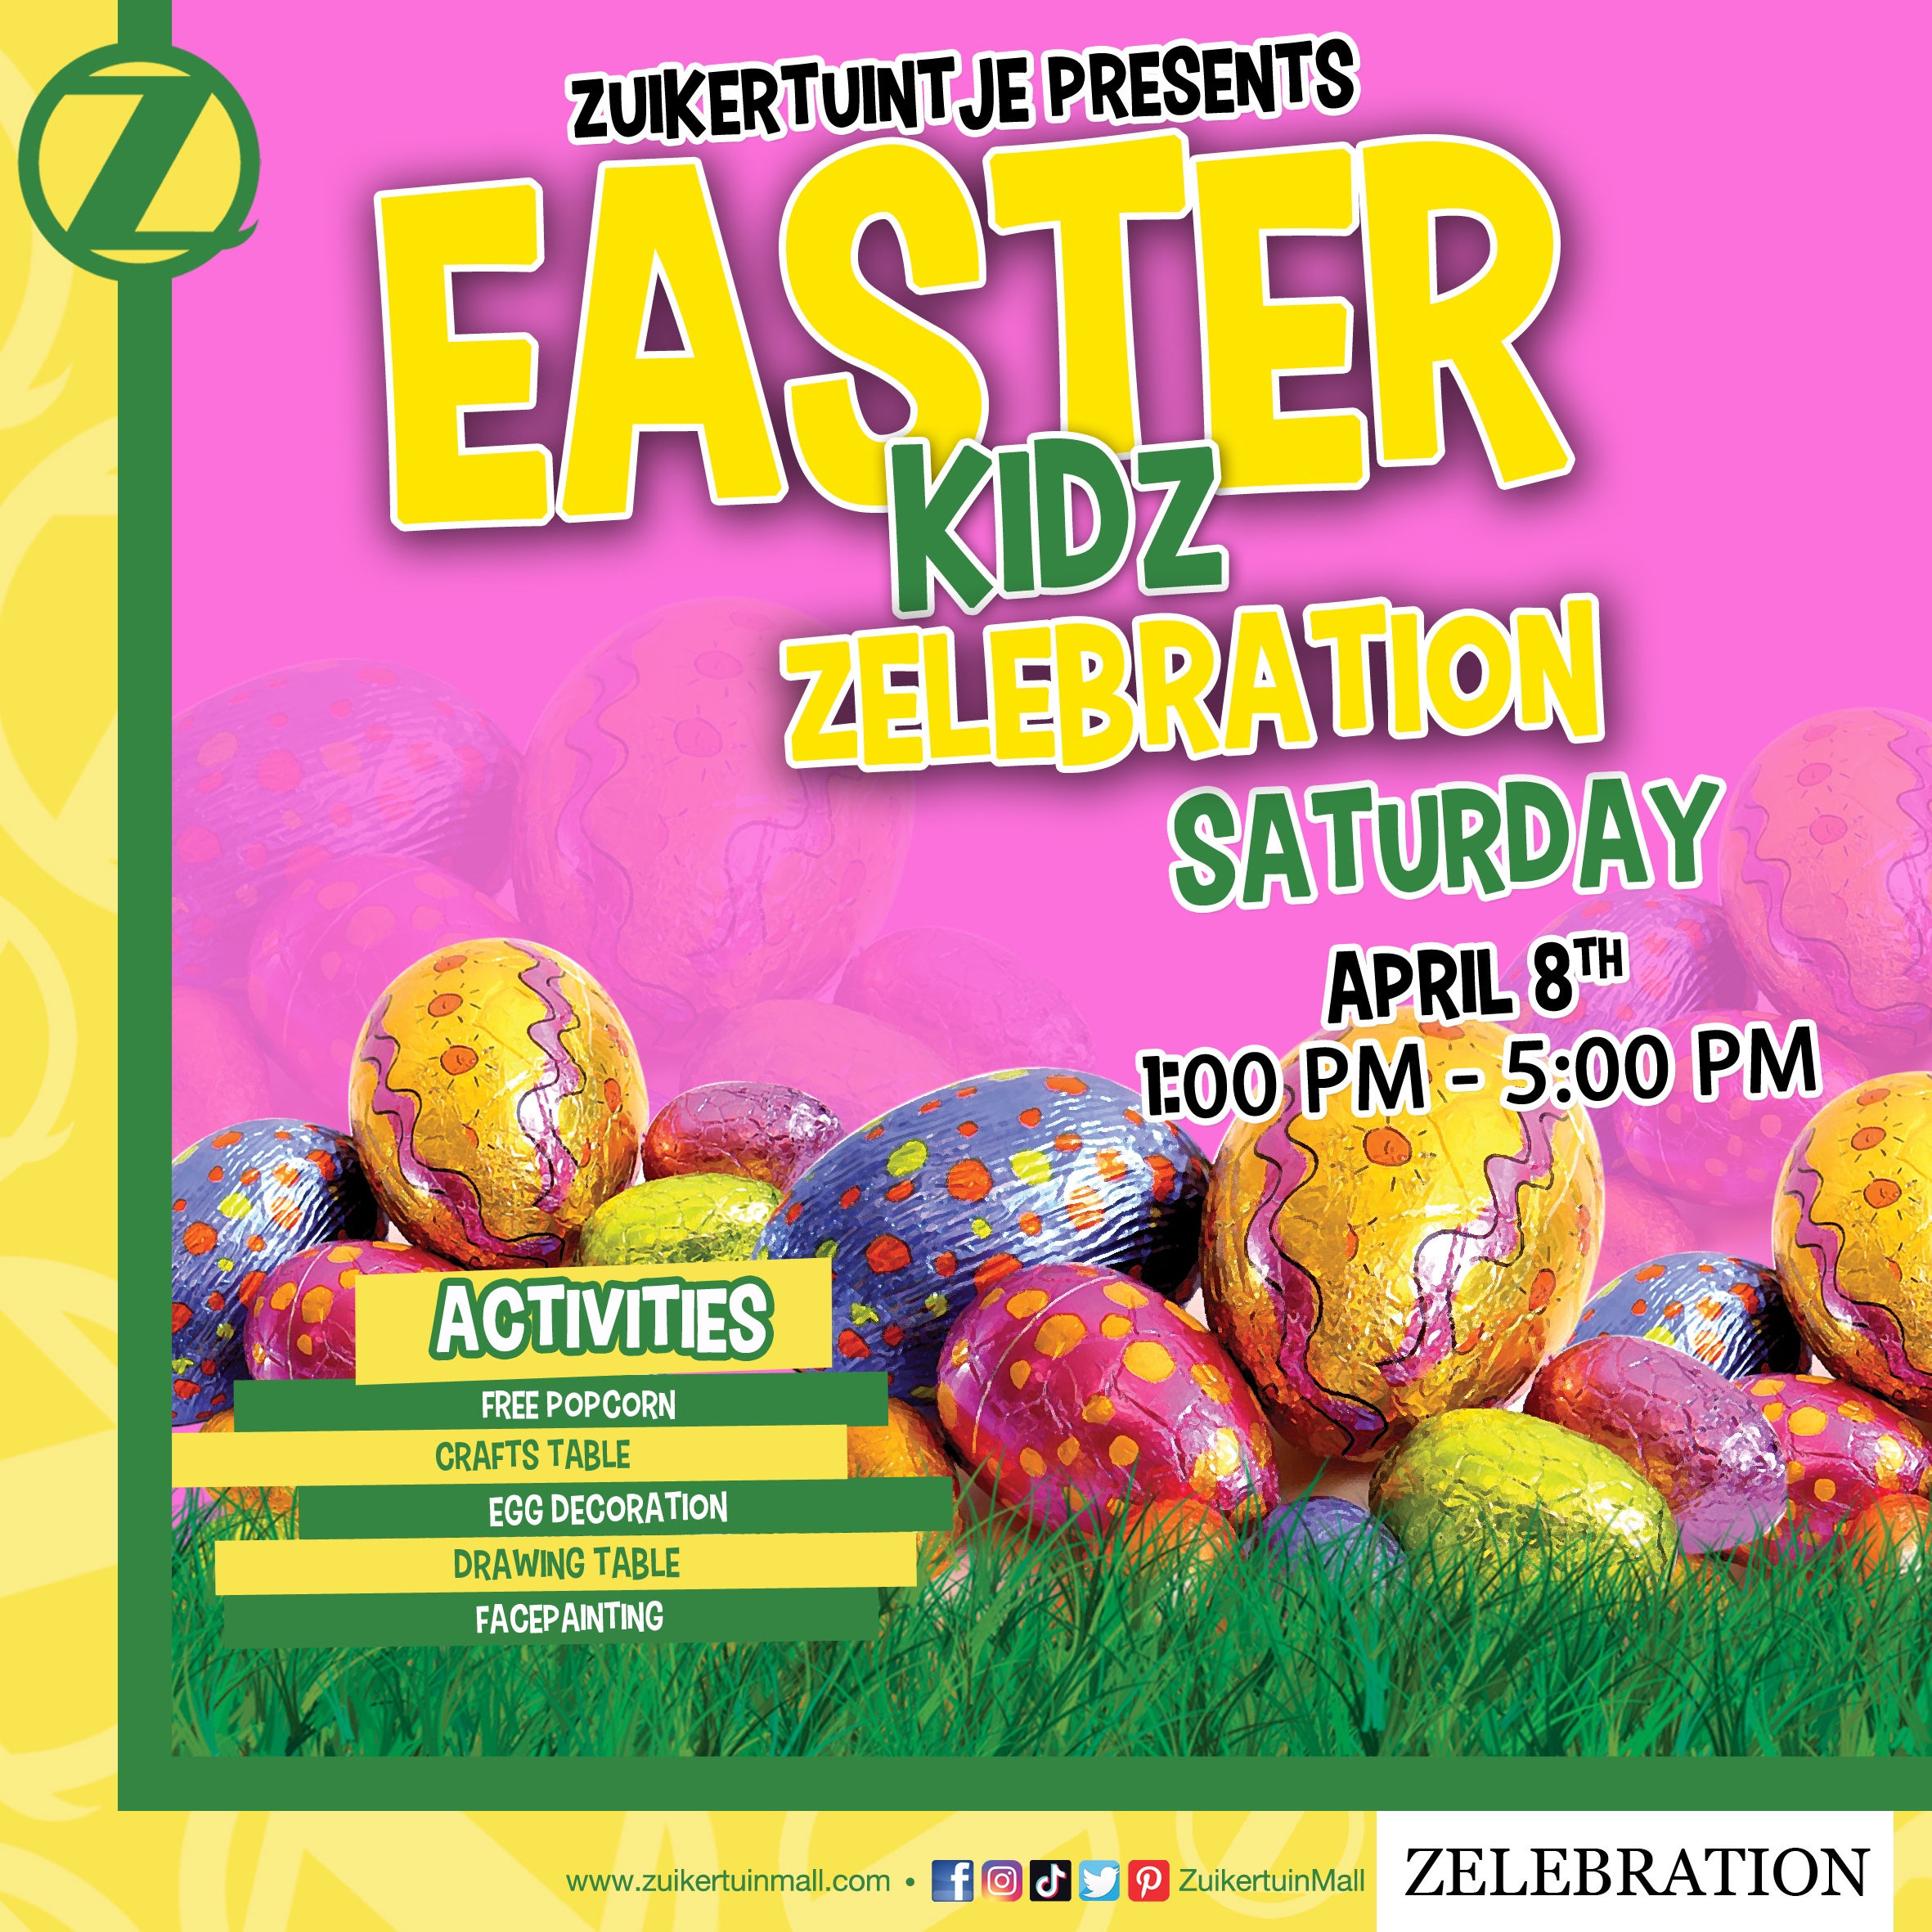 Zuikertuintje Easter Kidz Zelebration